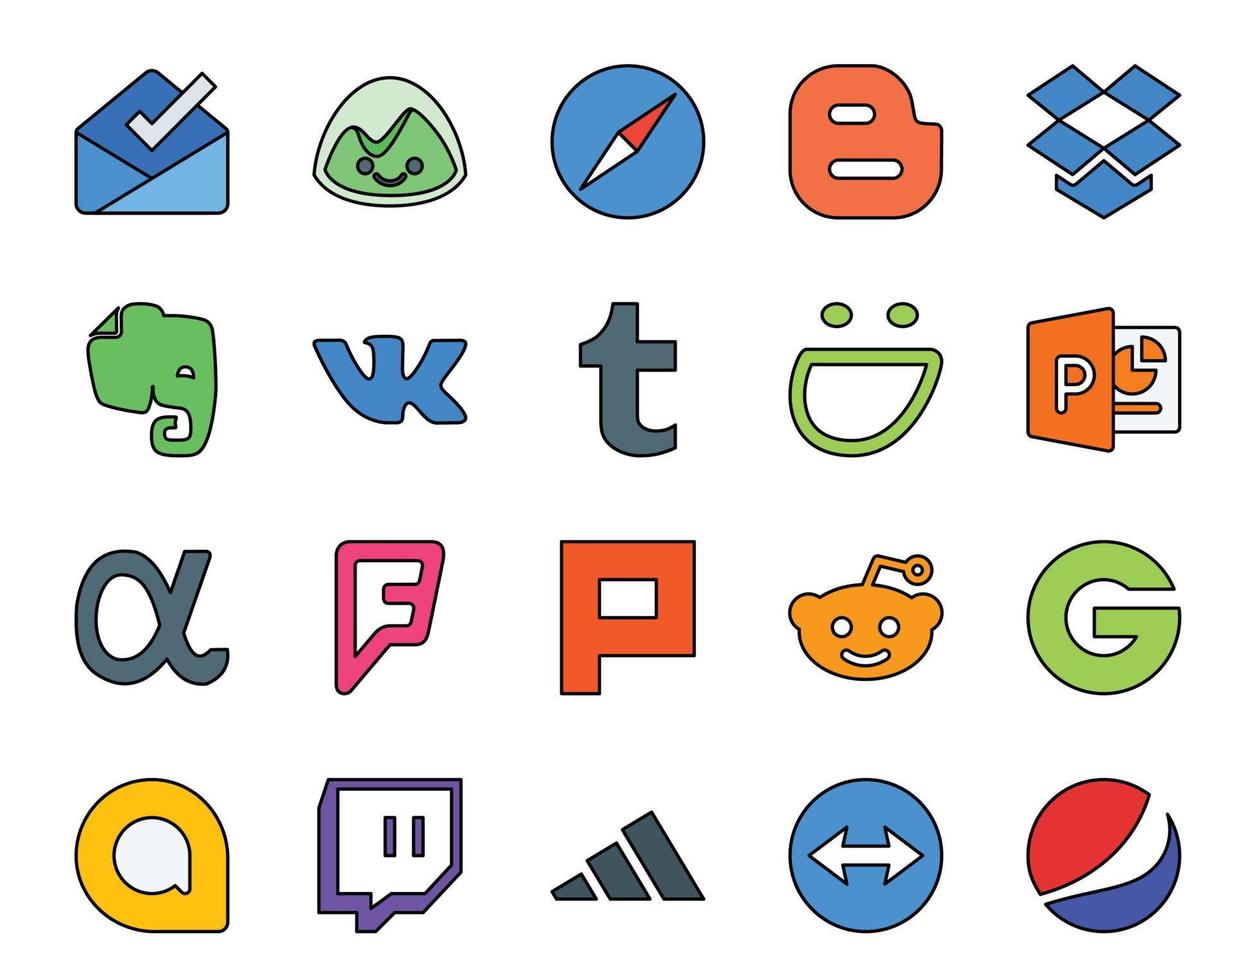 Paquete de 20 íconos de redes sociales que incluye twitch groupon tumblr reddit foursquare vector